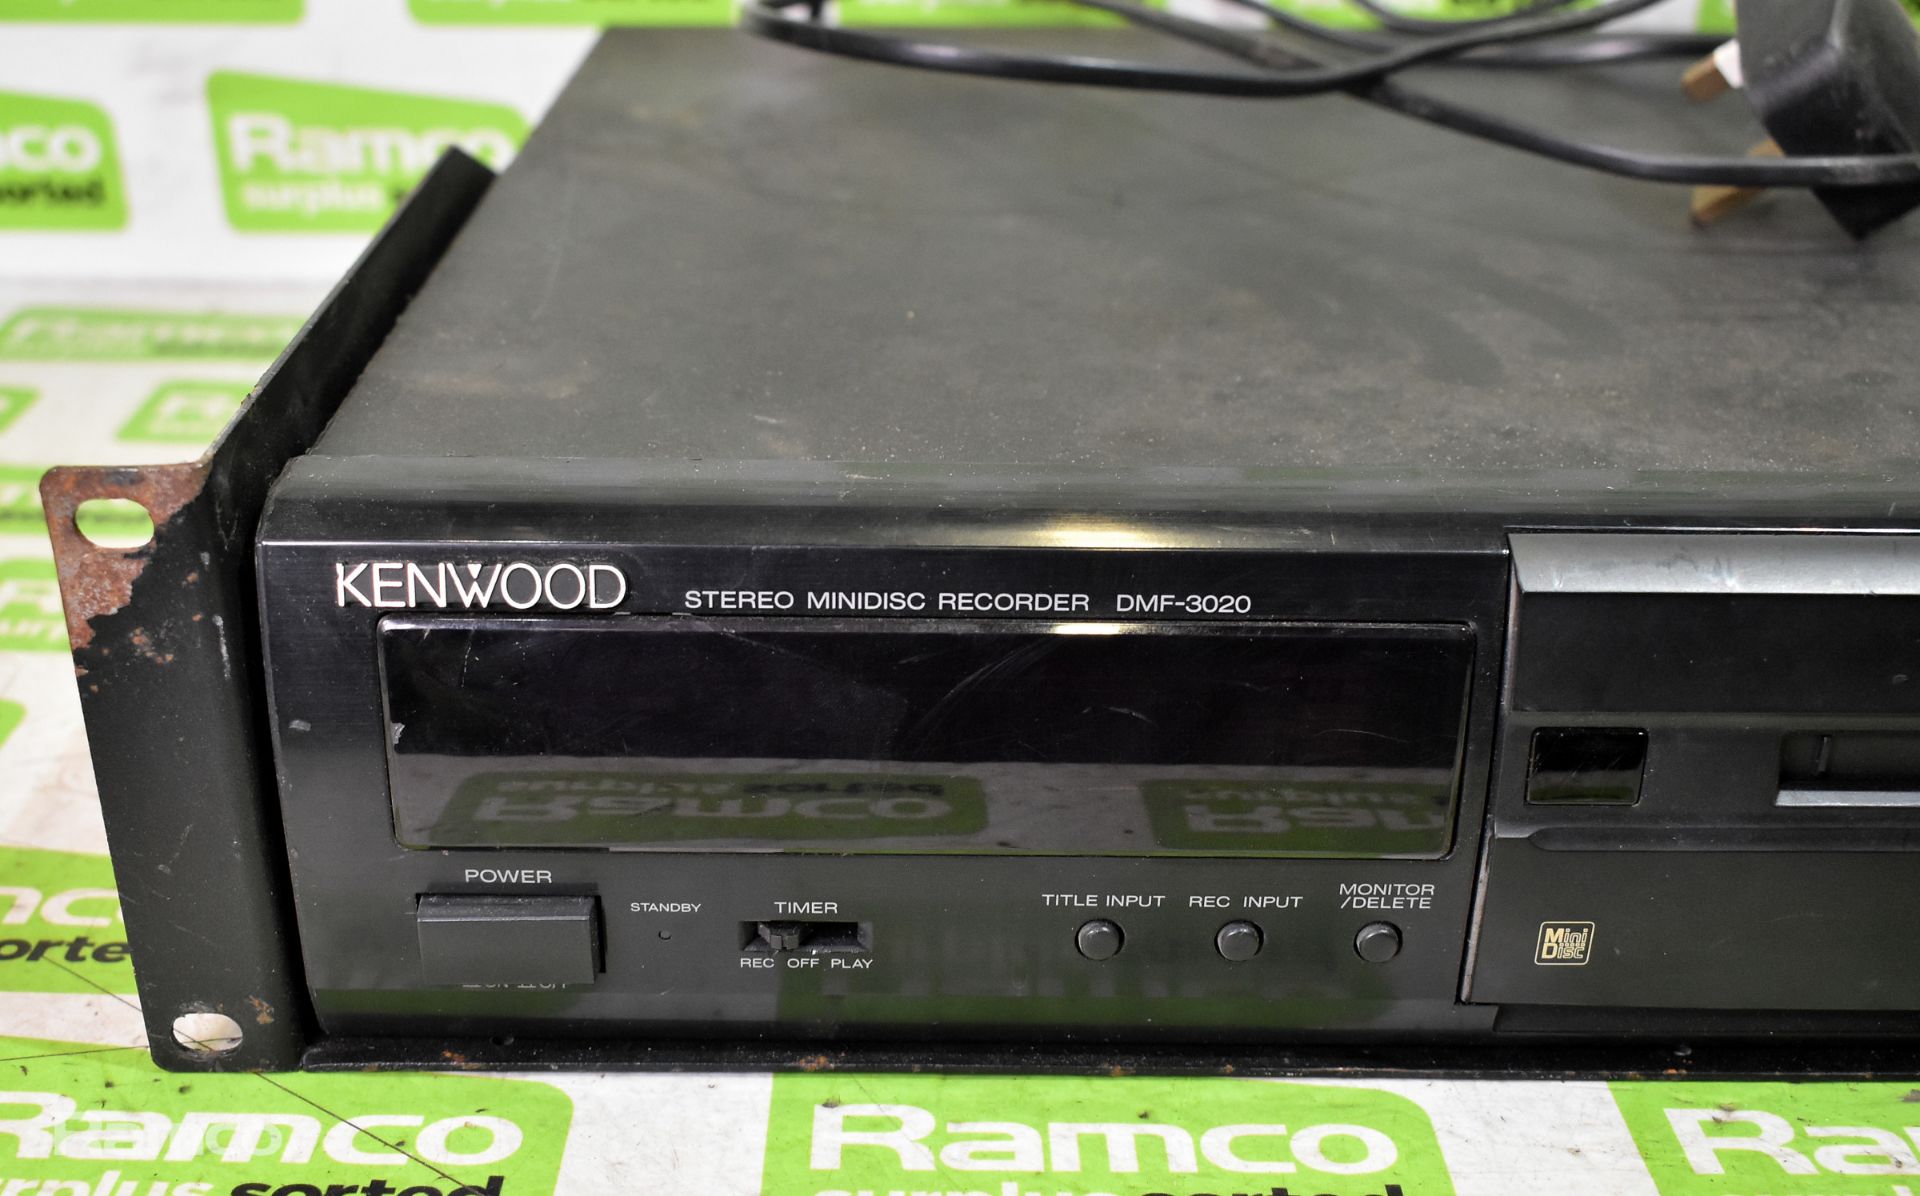 Kenwood DMF-3020 minidisc player, 230V 50Hz - L 490 x W 390 x H 90mm, Sony 530 AM/FM stereo tuner - Image 3 of 14